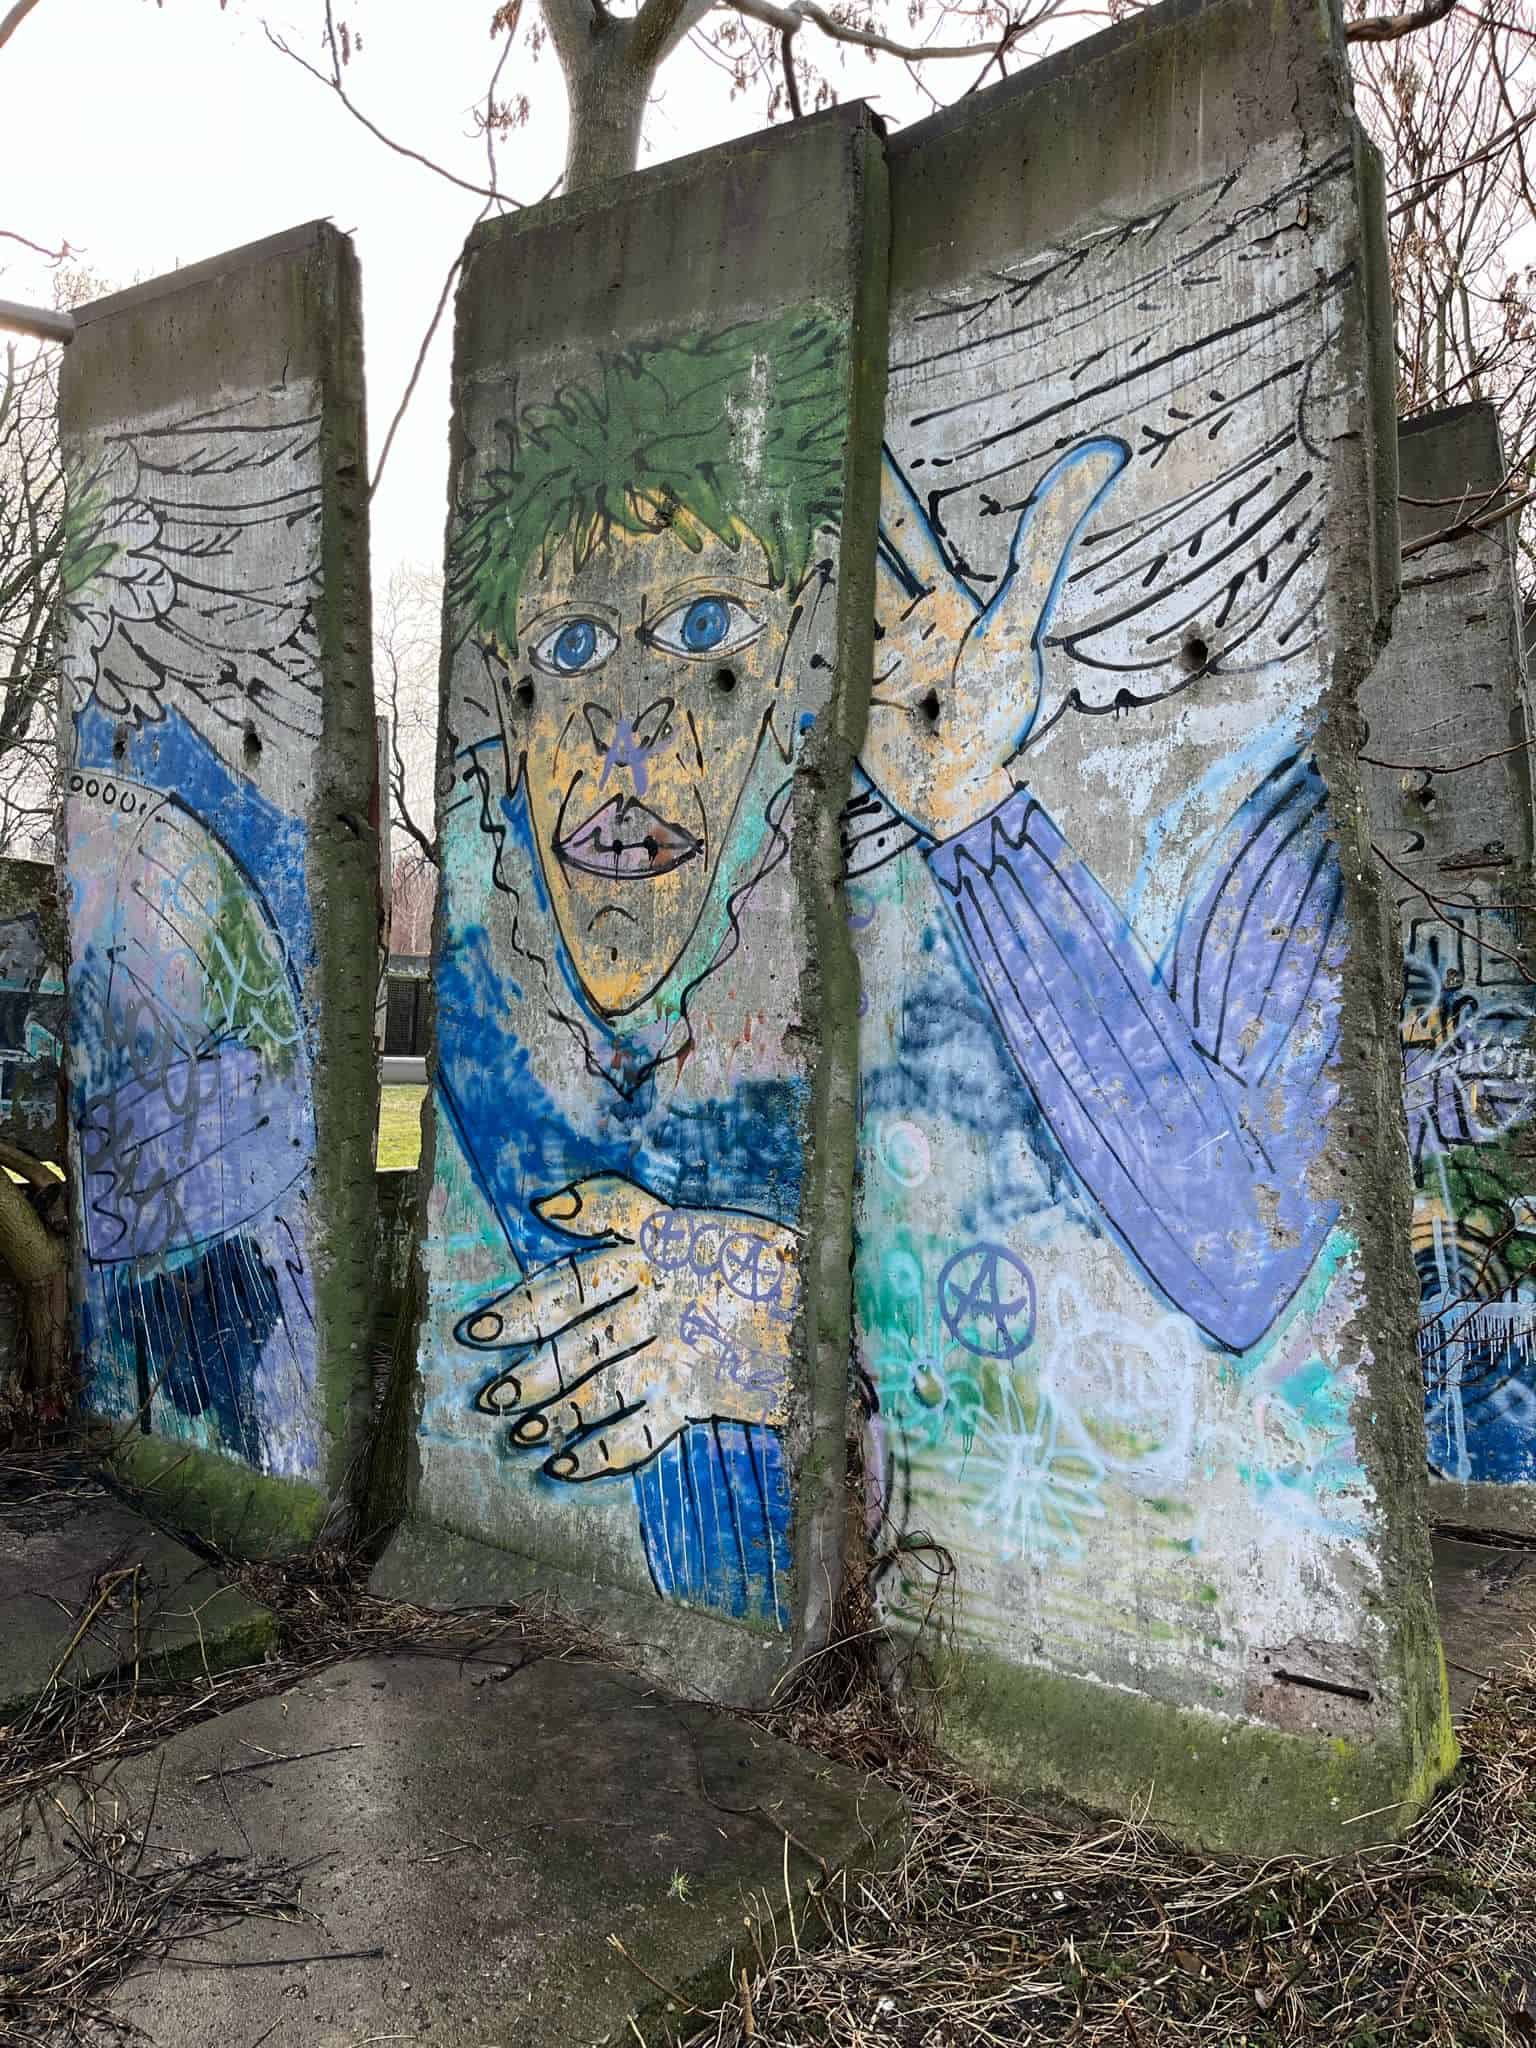 Berlin Wall memorial remains with graffiti